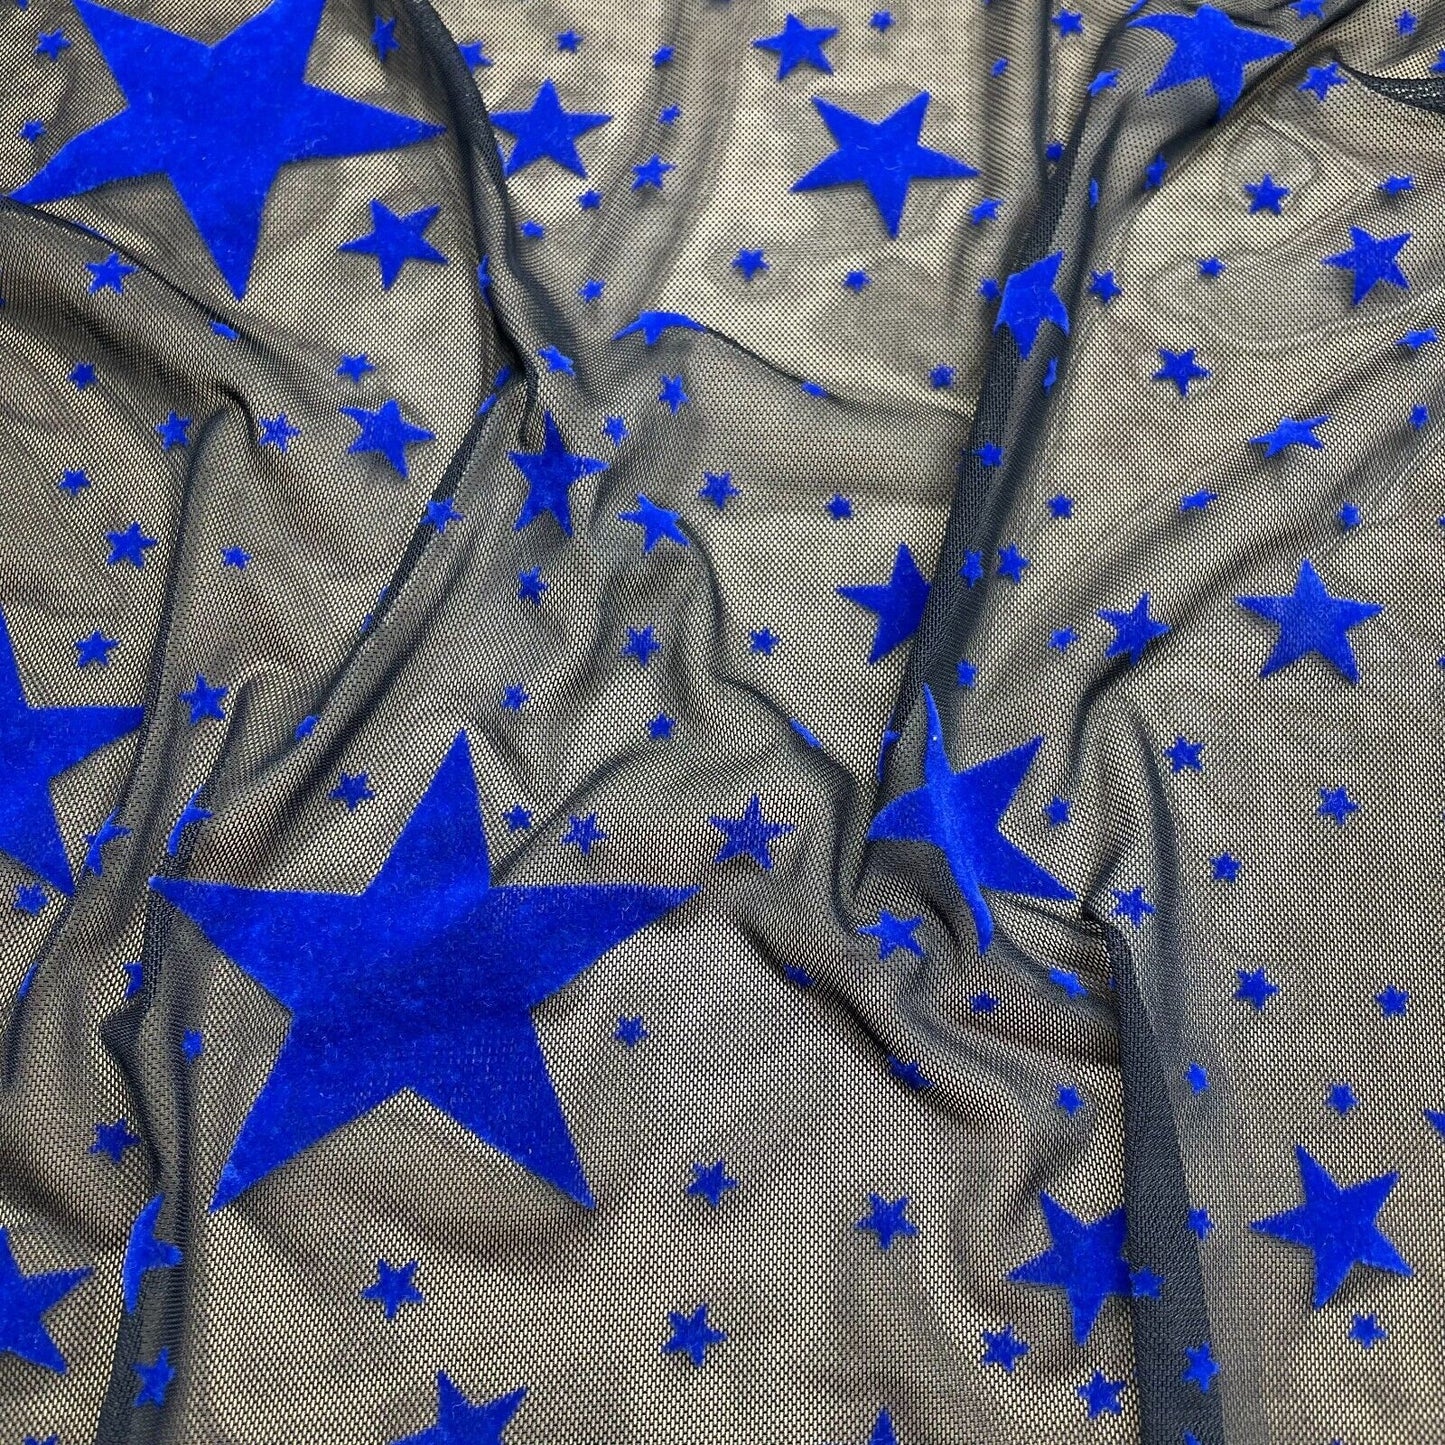 Power Mesh Net Fabric Flocked Blue Stars Black Colour 55" Wide